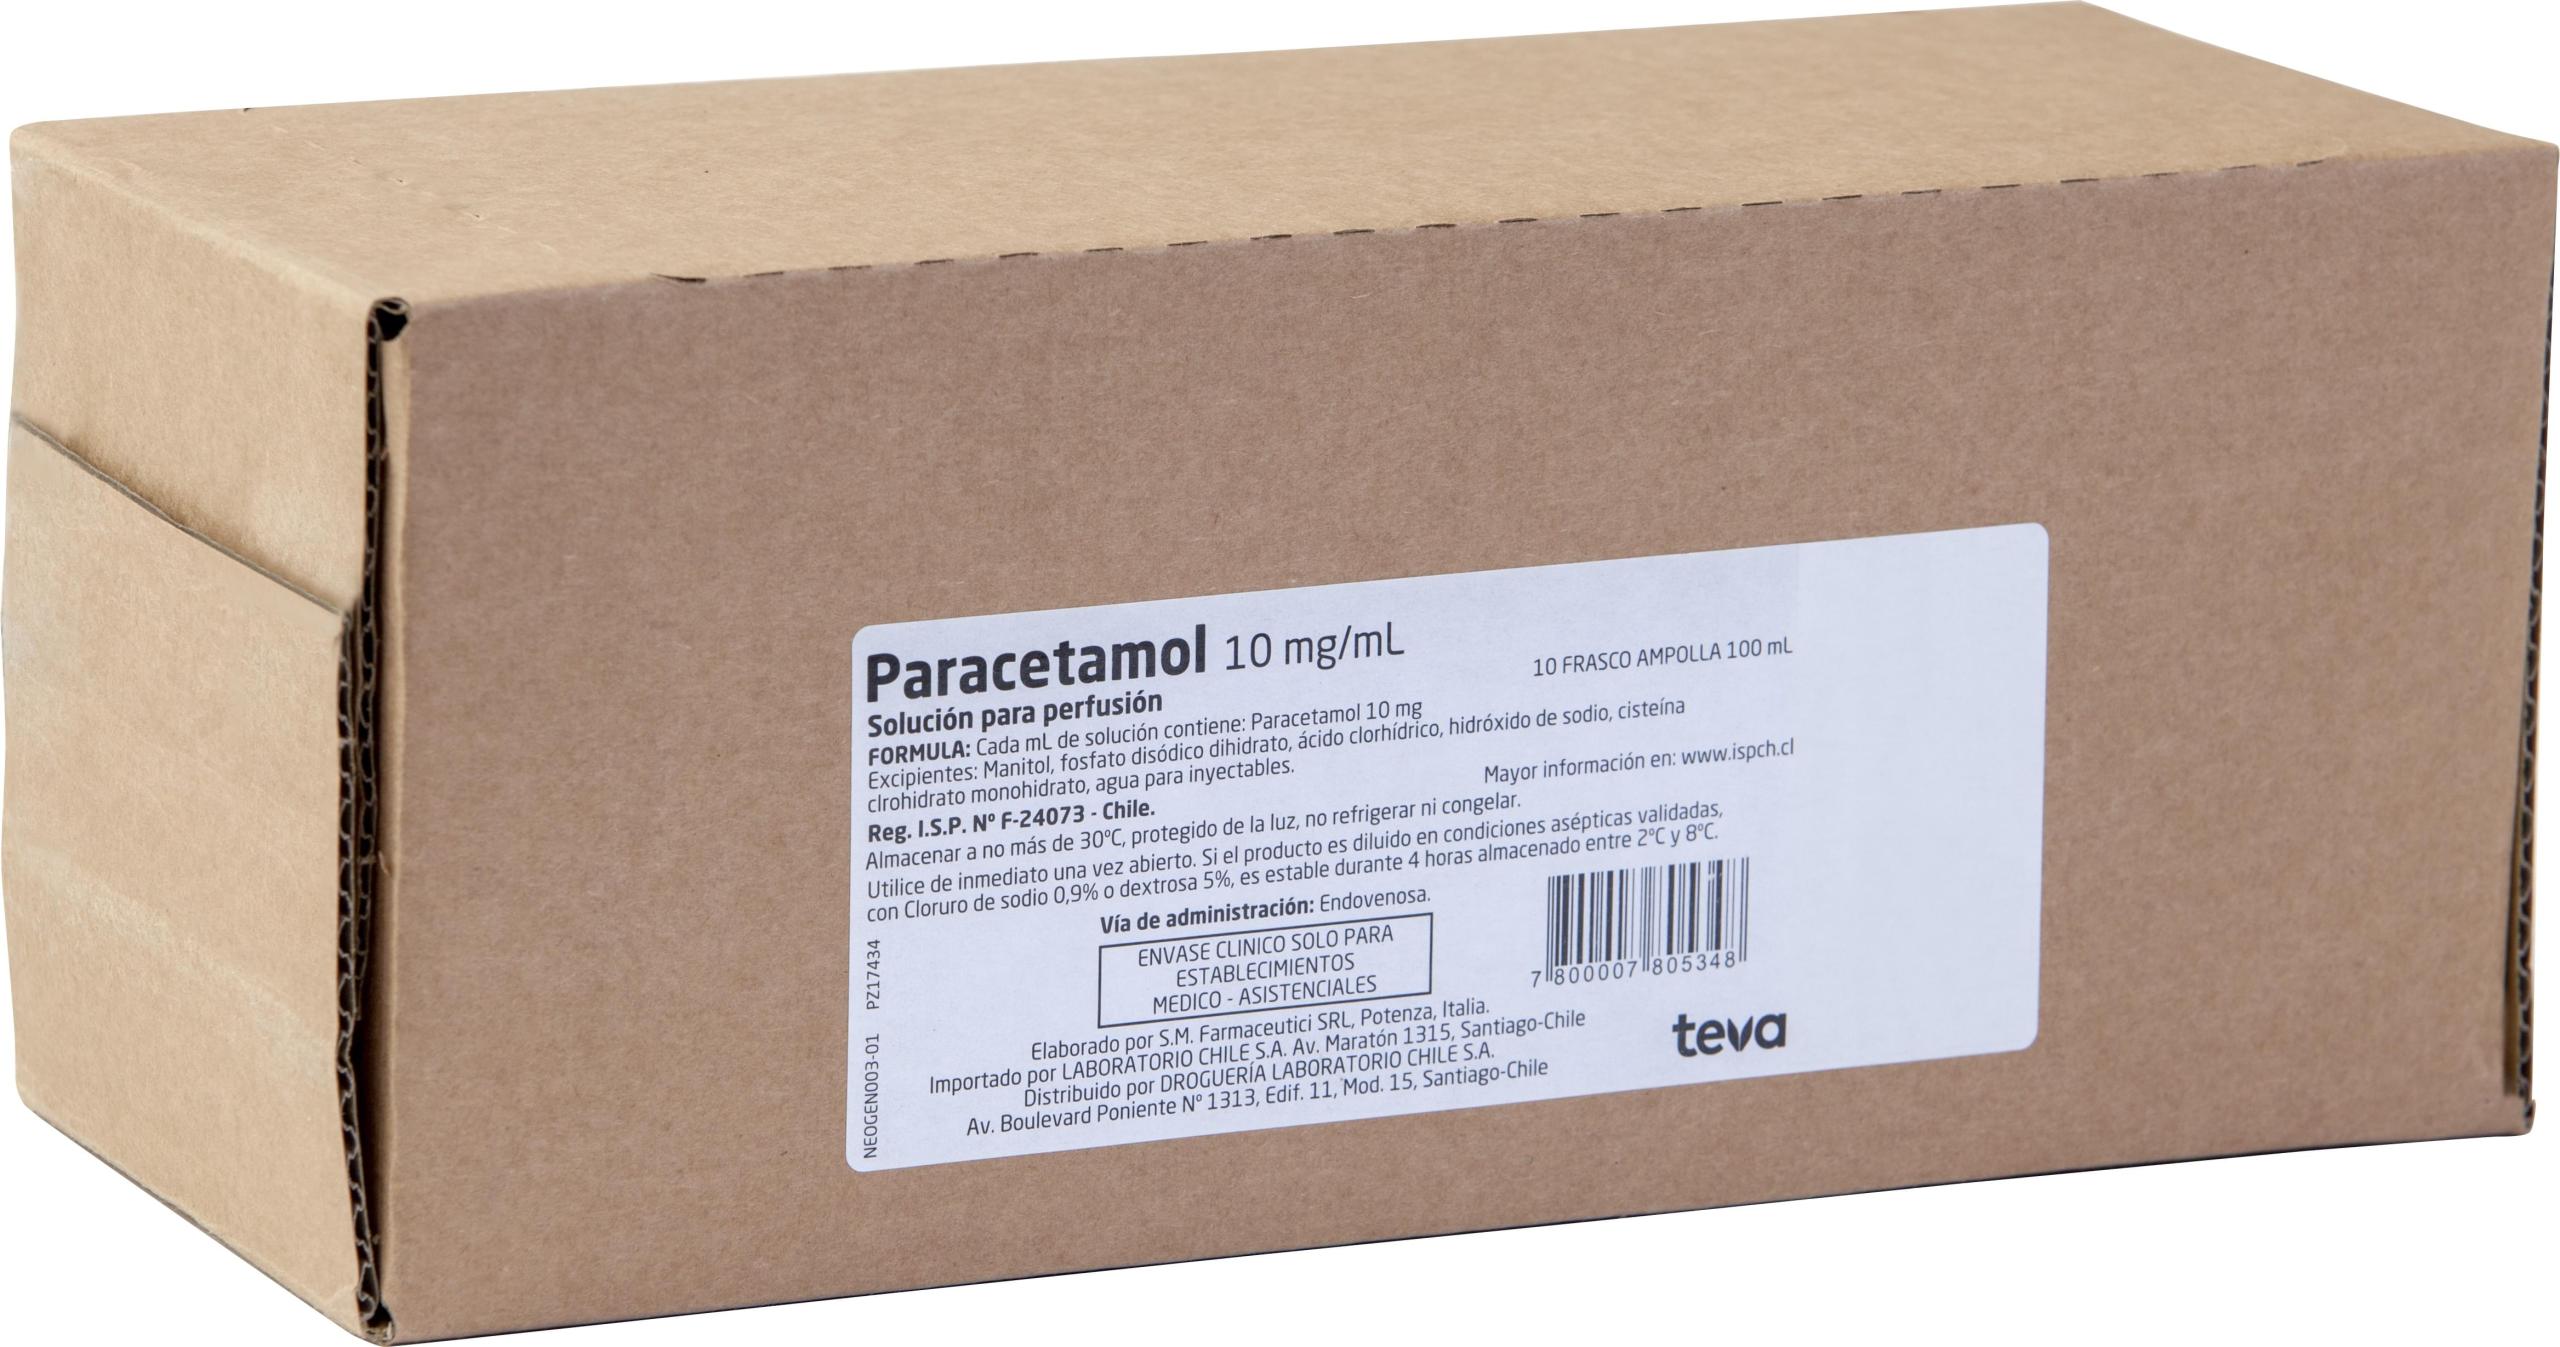 Caja de Paracetamol de diez miligramos